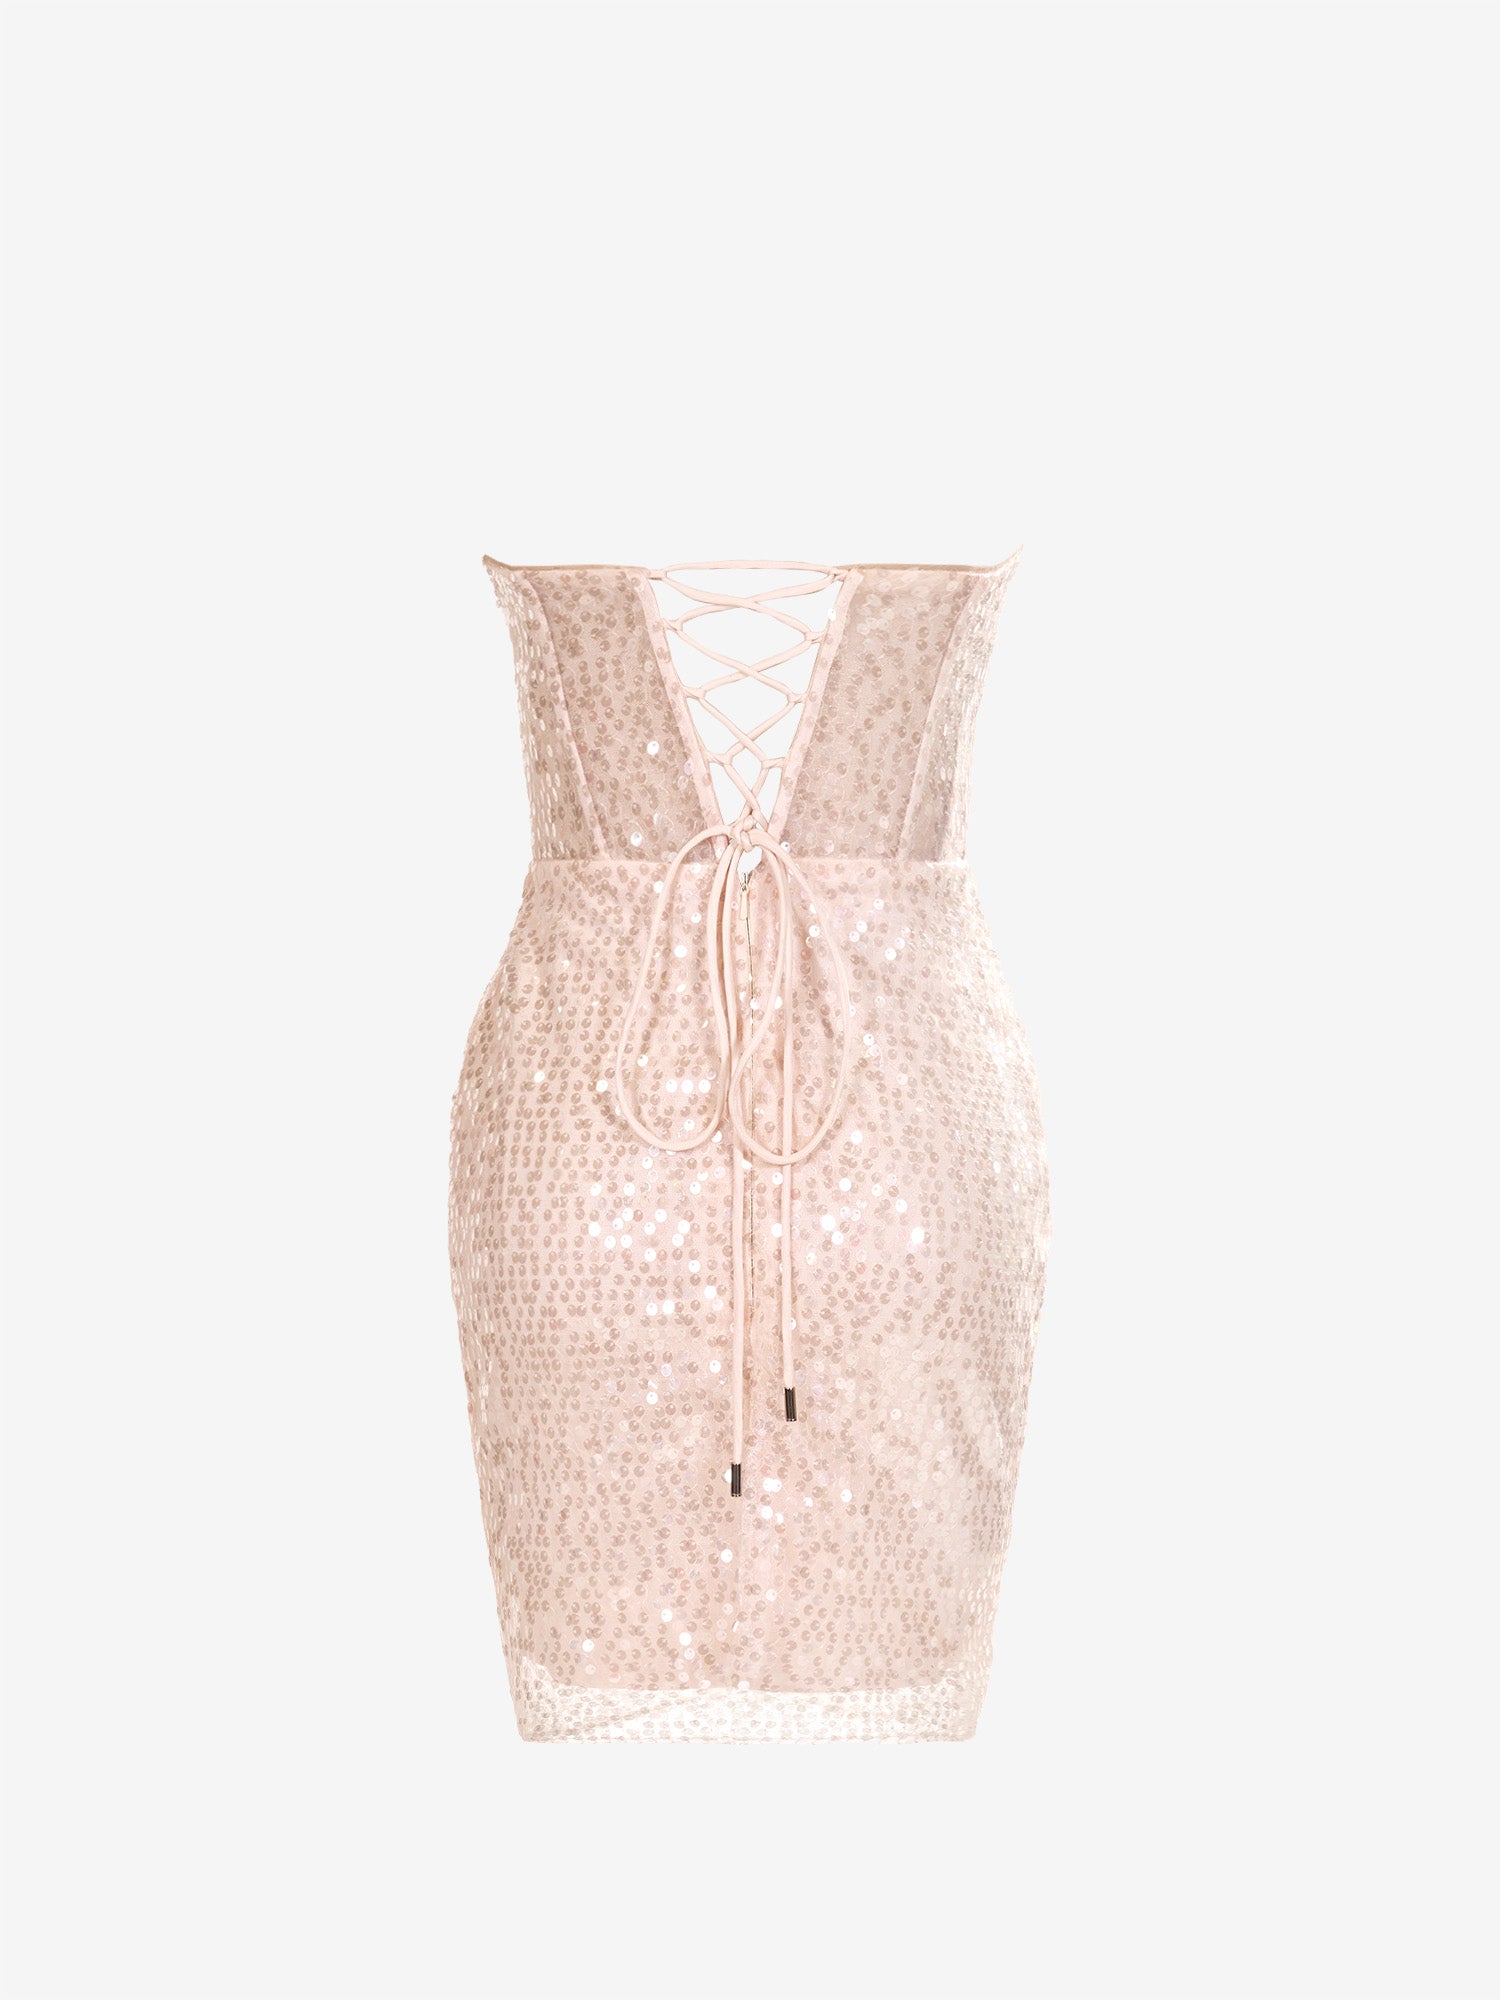 Isadora | Champagne Sheath Sweetheart Sequins Homecoming Dress